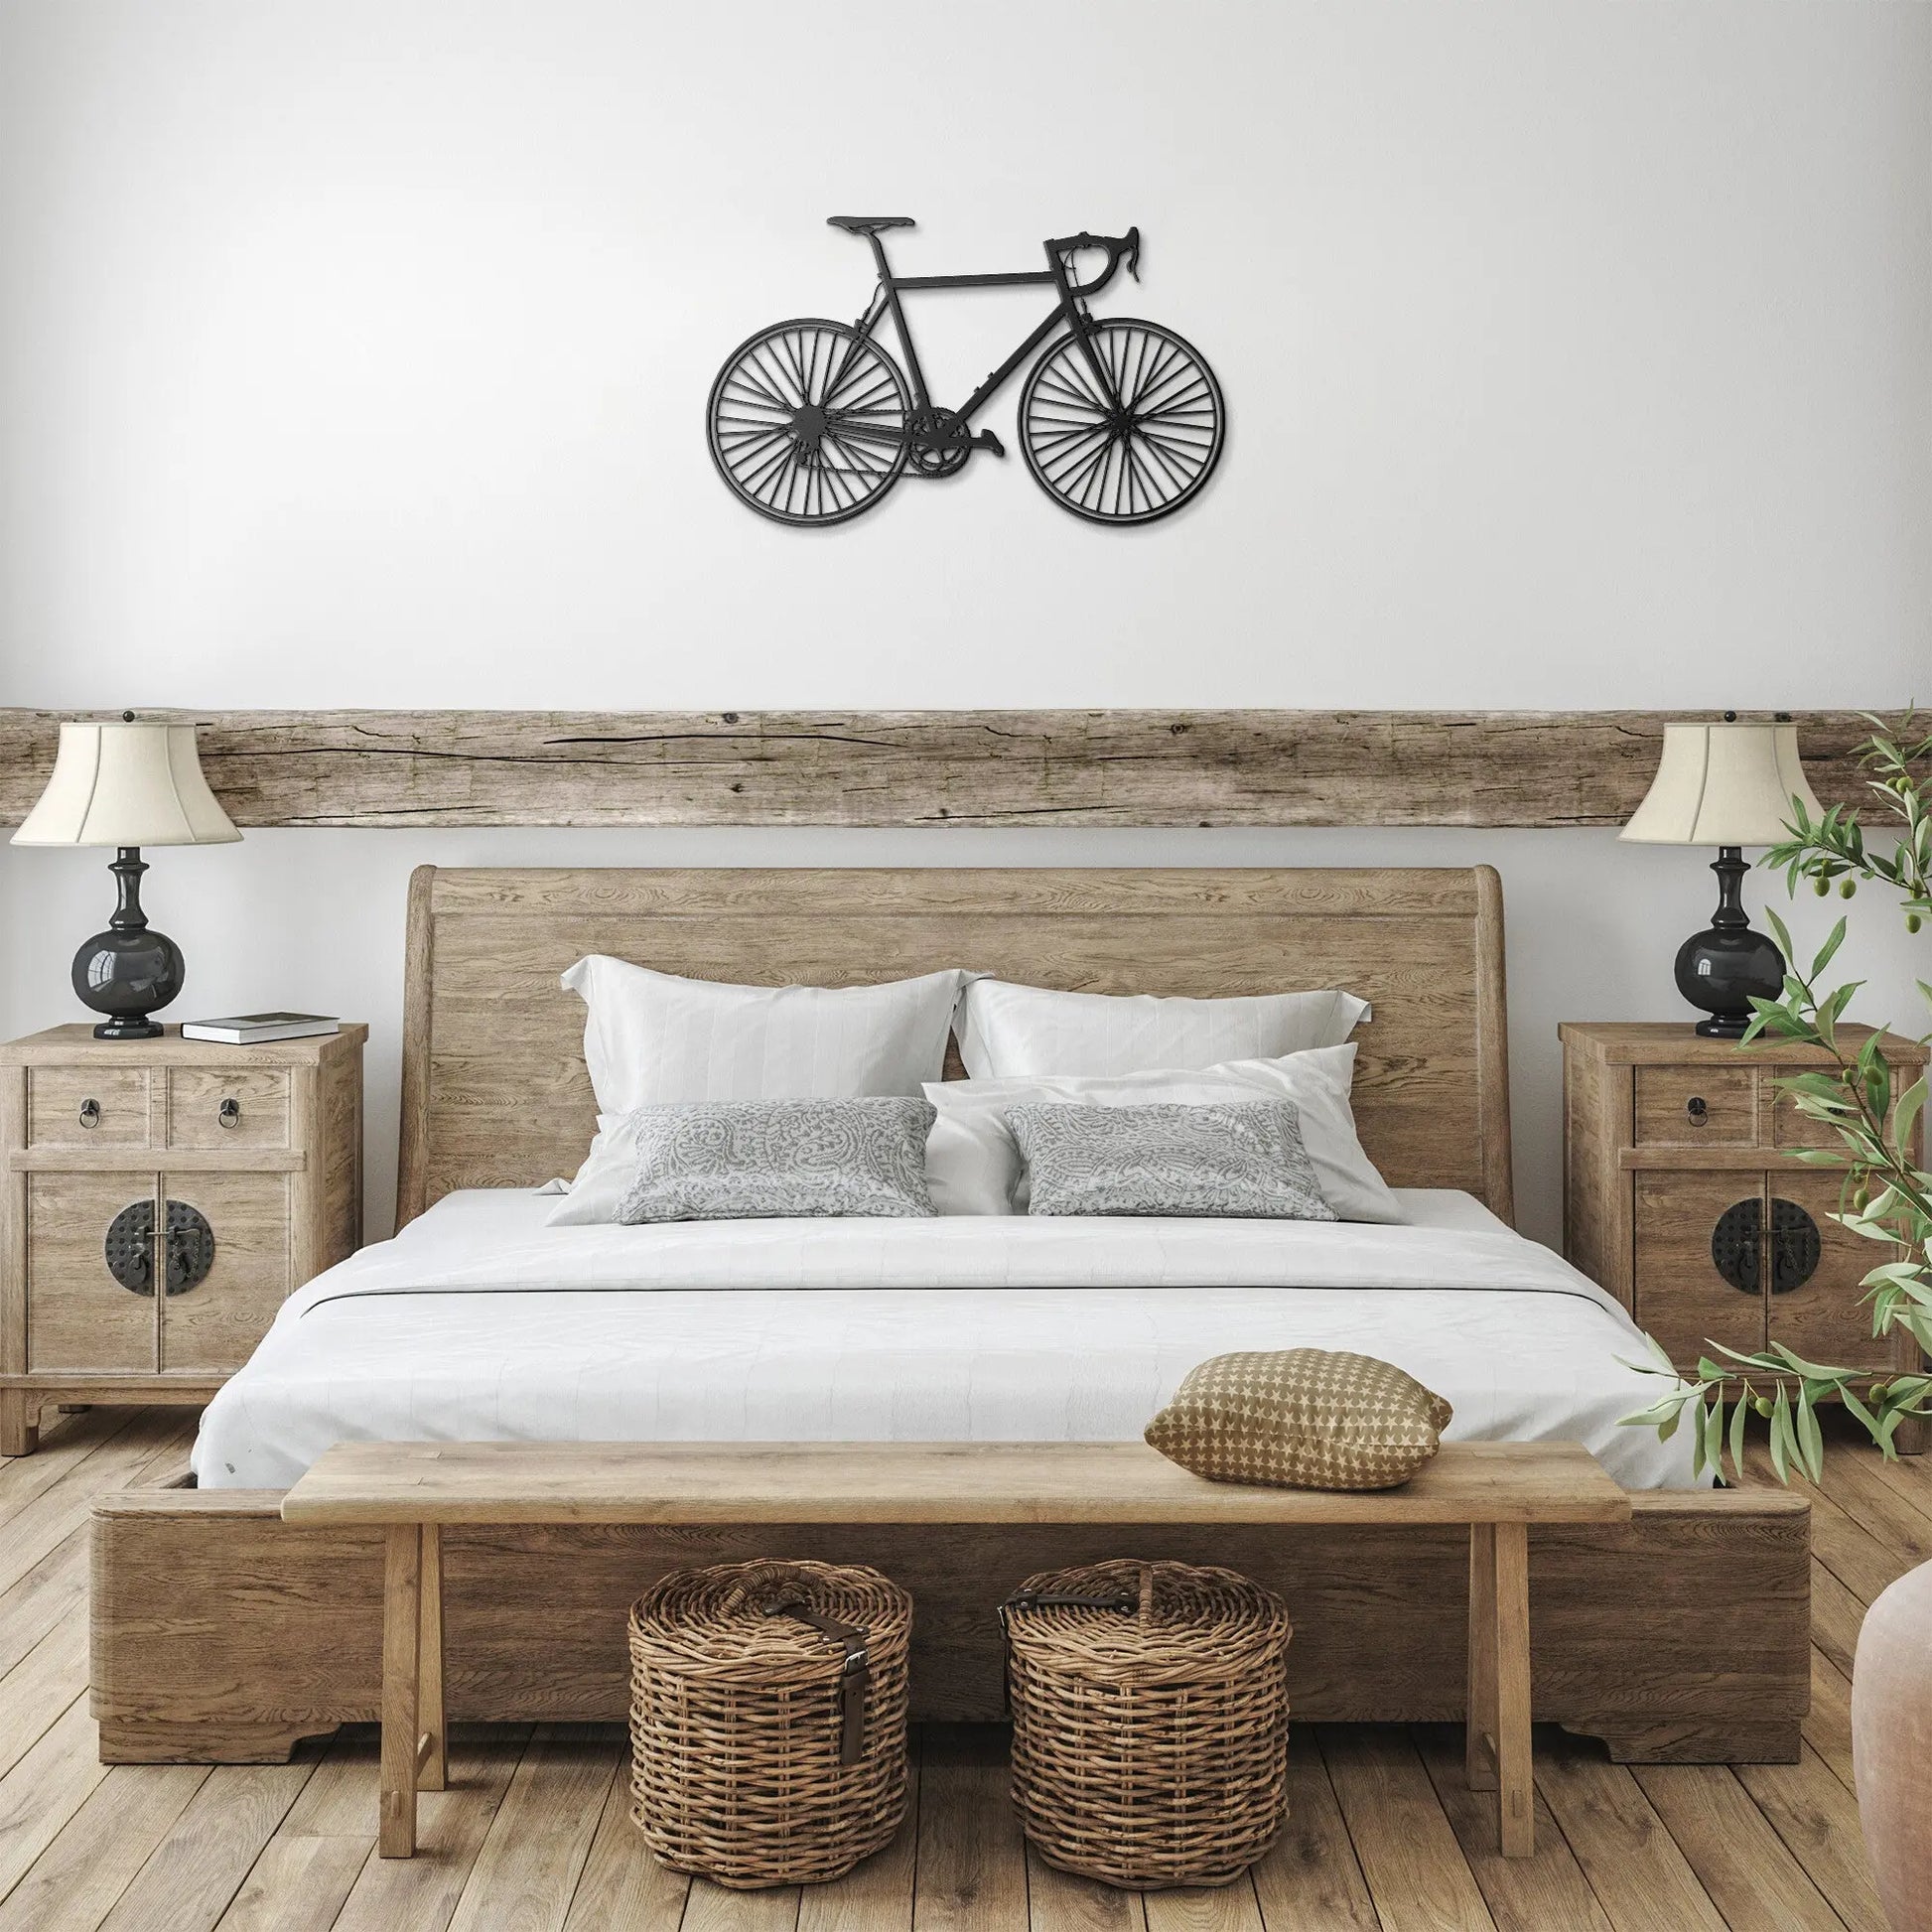 Wall Art Metal Bicycle Wall Art | Rider Bicycle Wall Sculpture | Metal Home Decor | Housewarming Gift | Kitchen, Bathroom,Living Room, Metal Wall Ar teelaunch